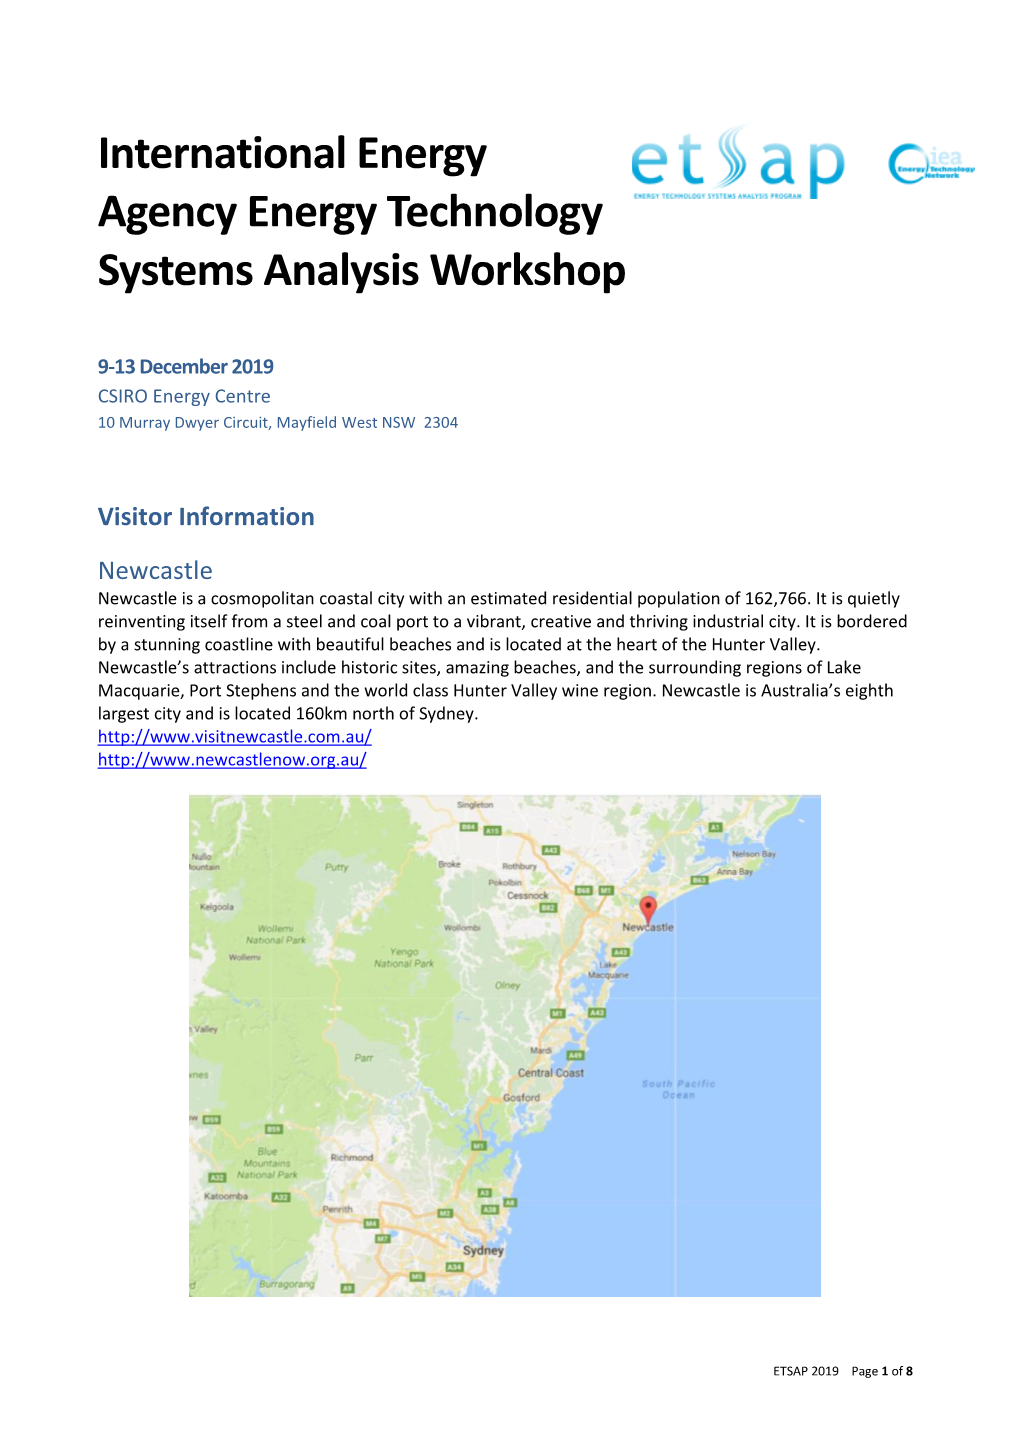 International Energy Agency Energy Technology Systems Analysis Workshop